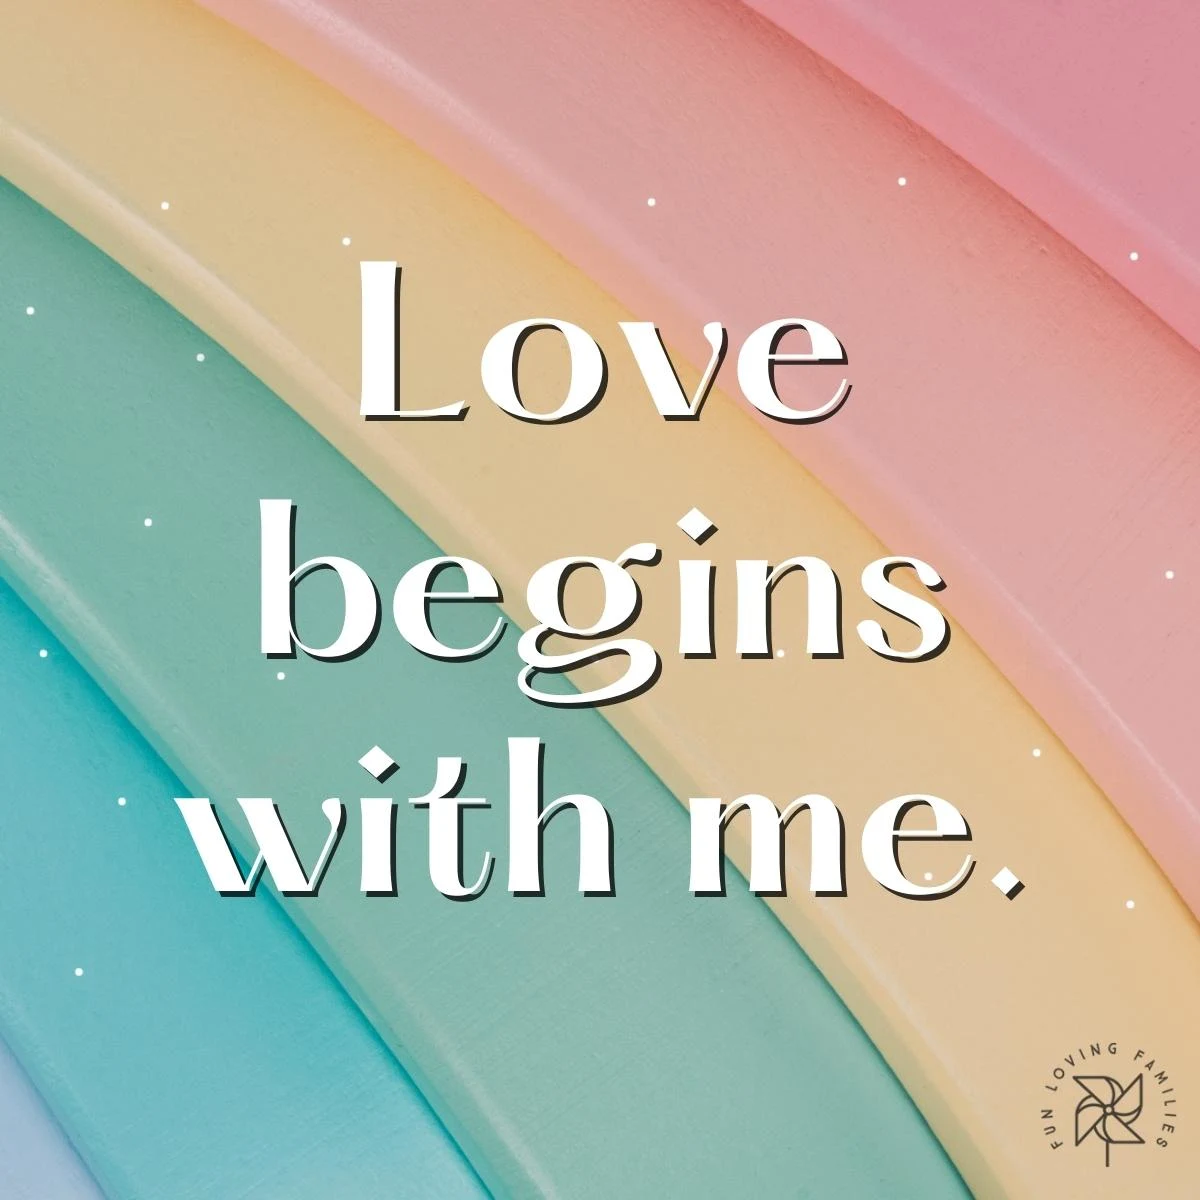 Love begins with me affirmation image